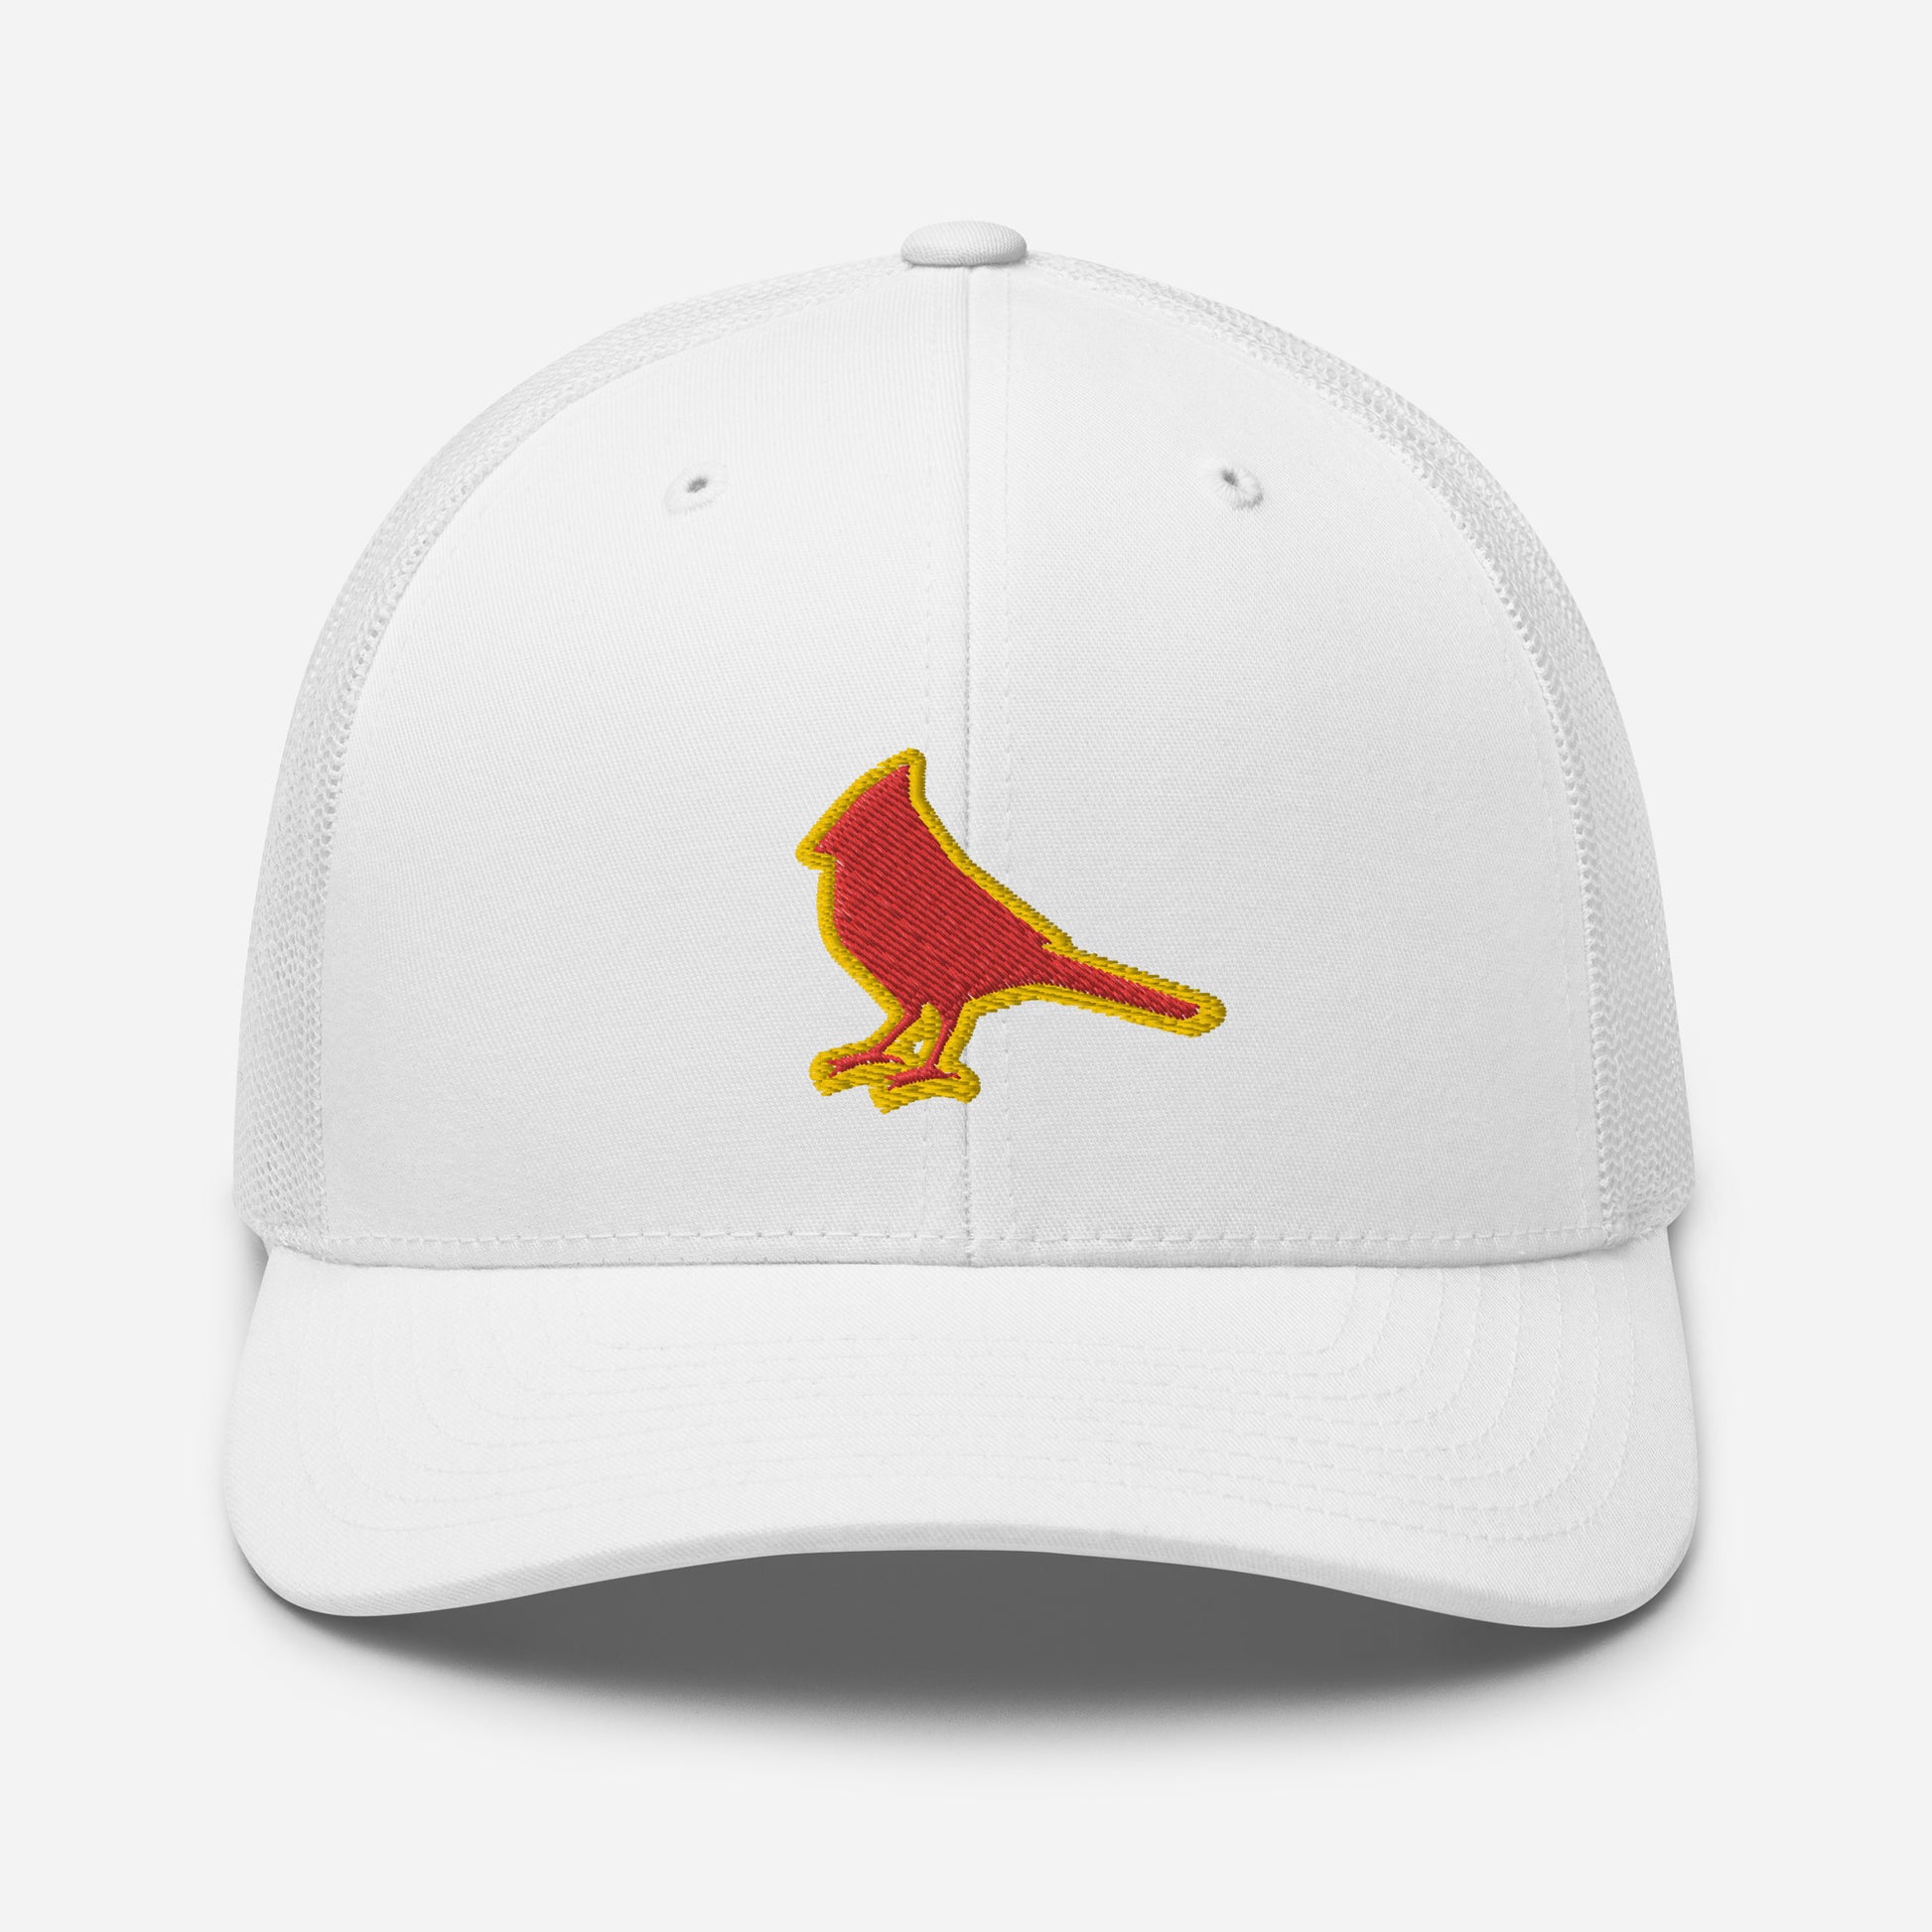 St. Louis Baseball Trucker Cap Cardinal Hat White